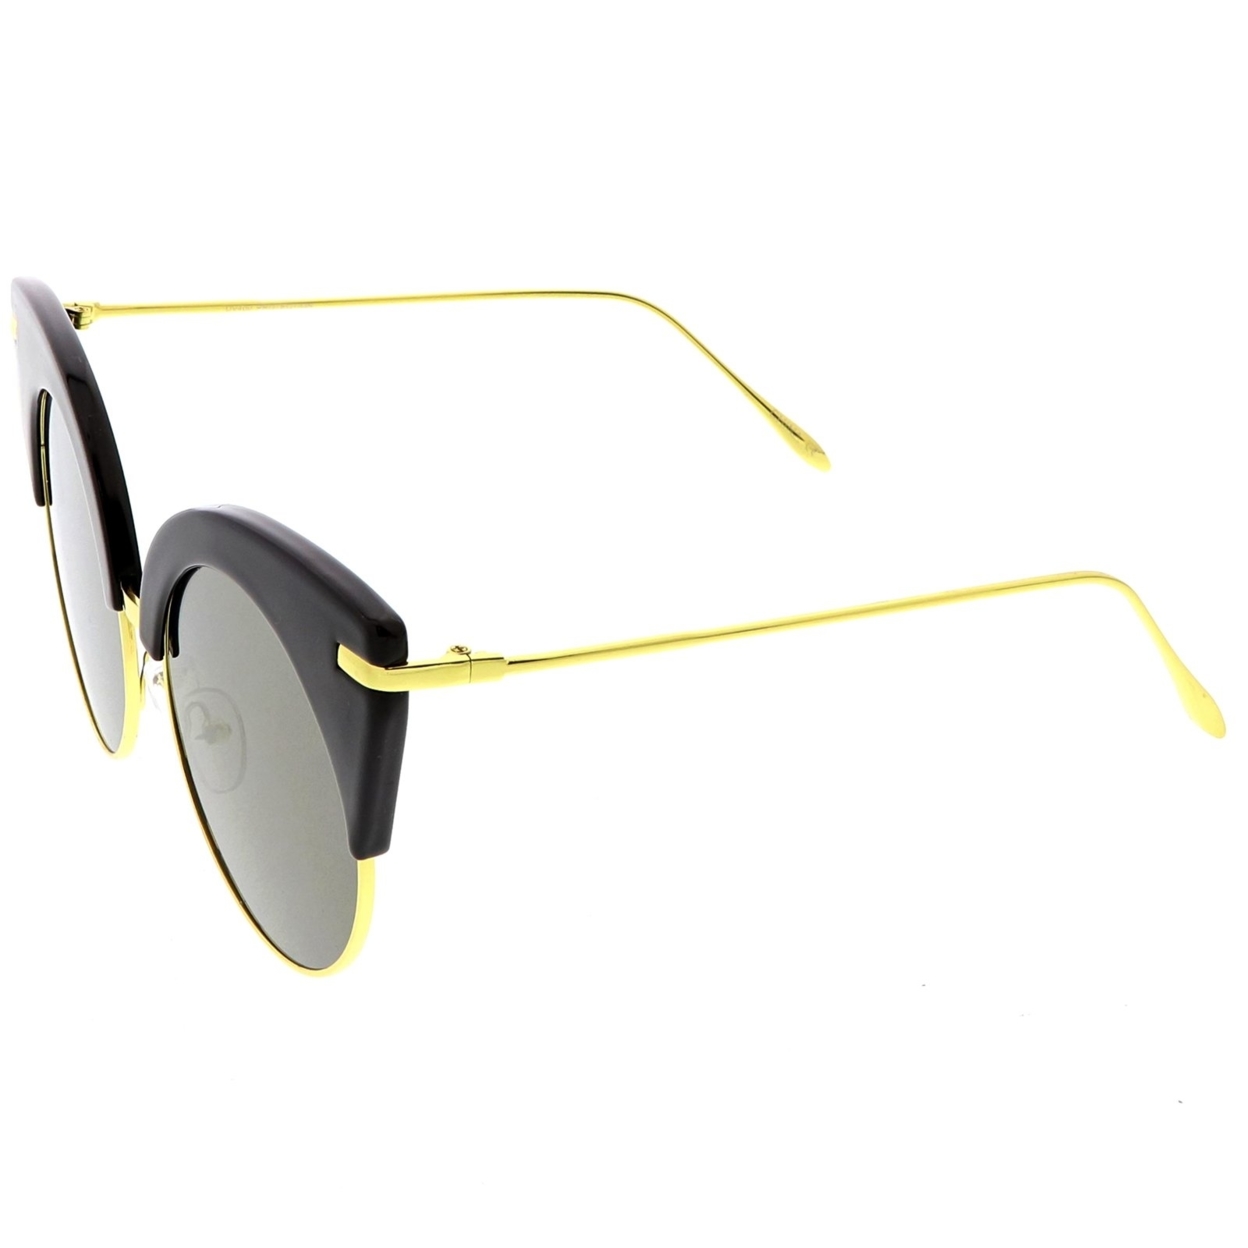 Oversize Half Frame Cat Eye Sunglasses Ultra Slim Arms Round Mirrored Flat Lens 54mm - Black Gold / Gold Mirror